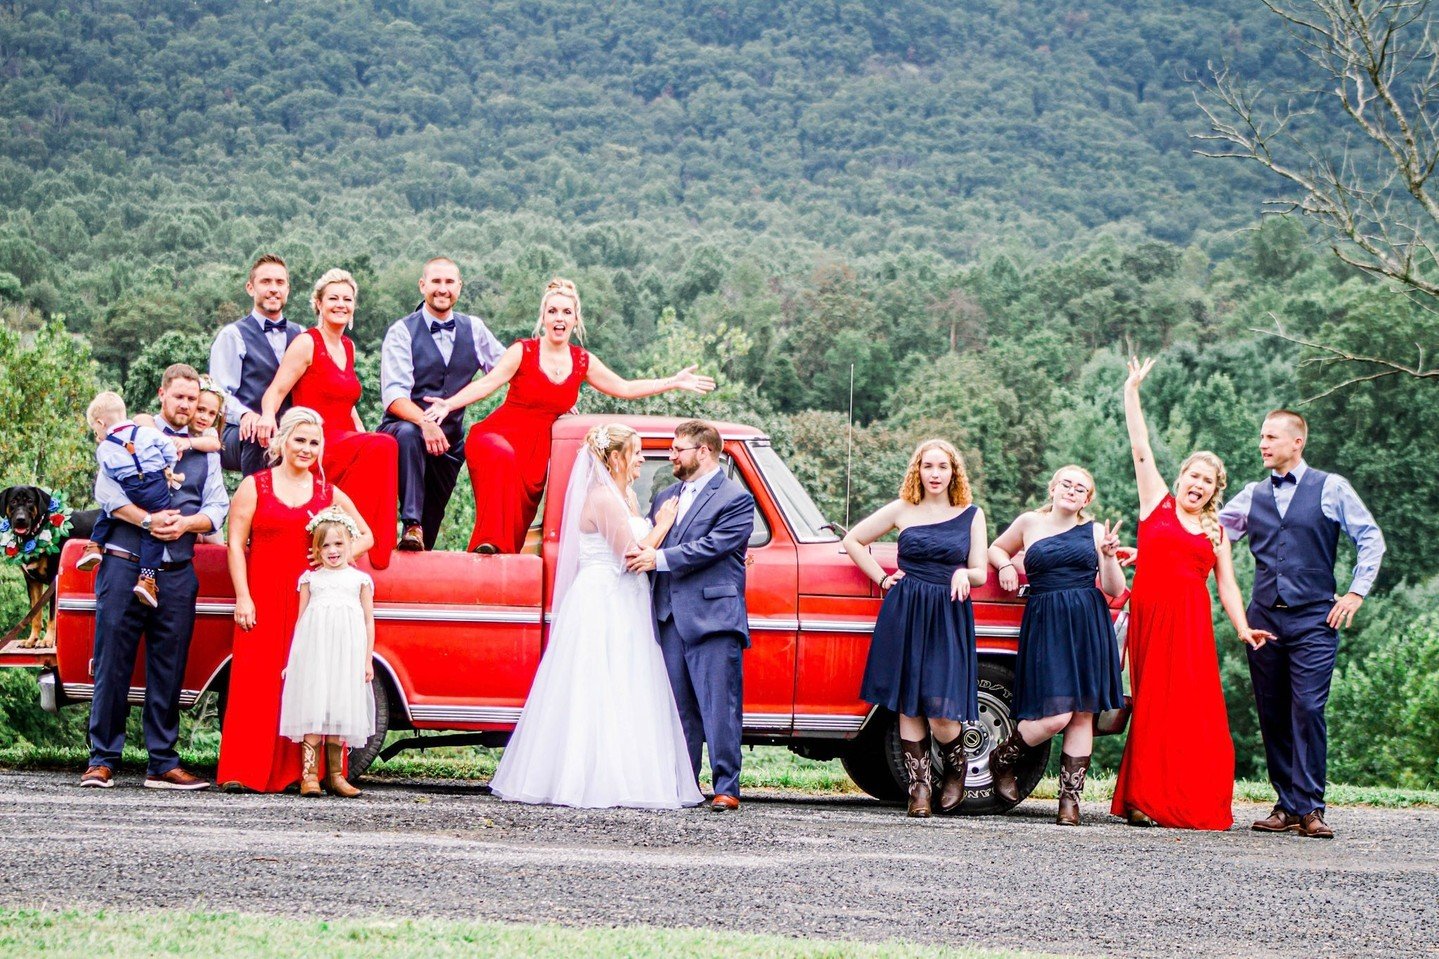 Create your perfect day at the Meadows at Castleton.⁠
⁠
Find out more at www.castletonmeadows.com (link in profile)⁠
.⁠
.⁠
.⁠
.⁠
.⁠
.⁠
.⁠
.⁠
.⁠
.⁠
.⁠
.⁠
.⁠
⁠
#farmwedding #weddingvenue #weddinginspiration #weddingday #weddingplanner #weddingphotraphy